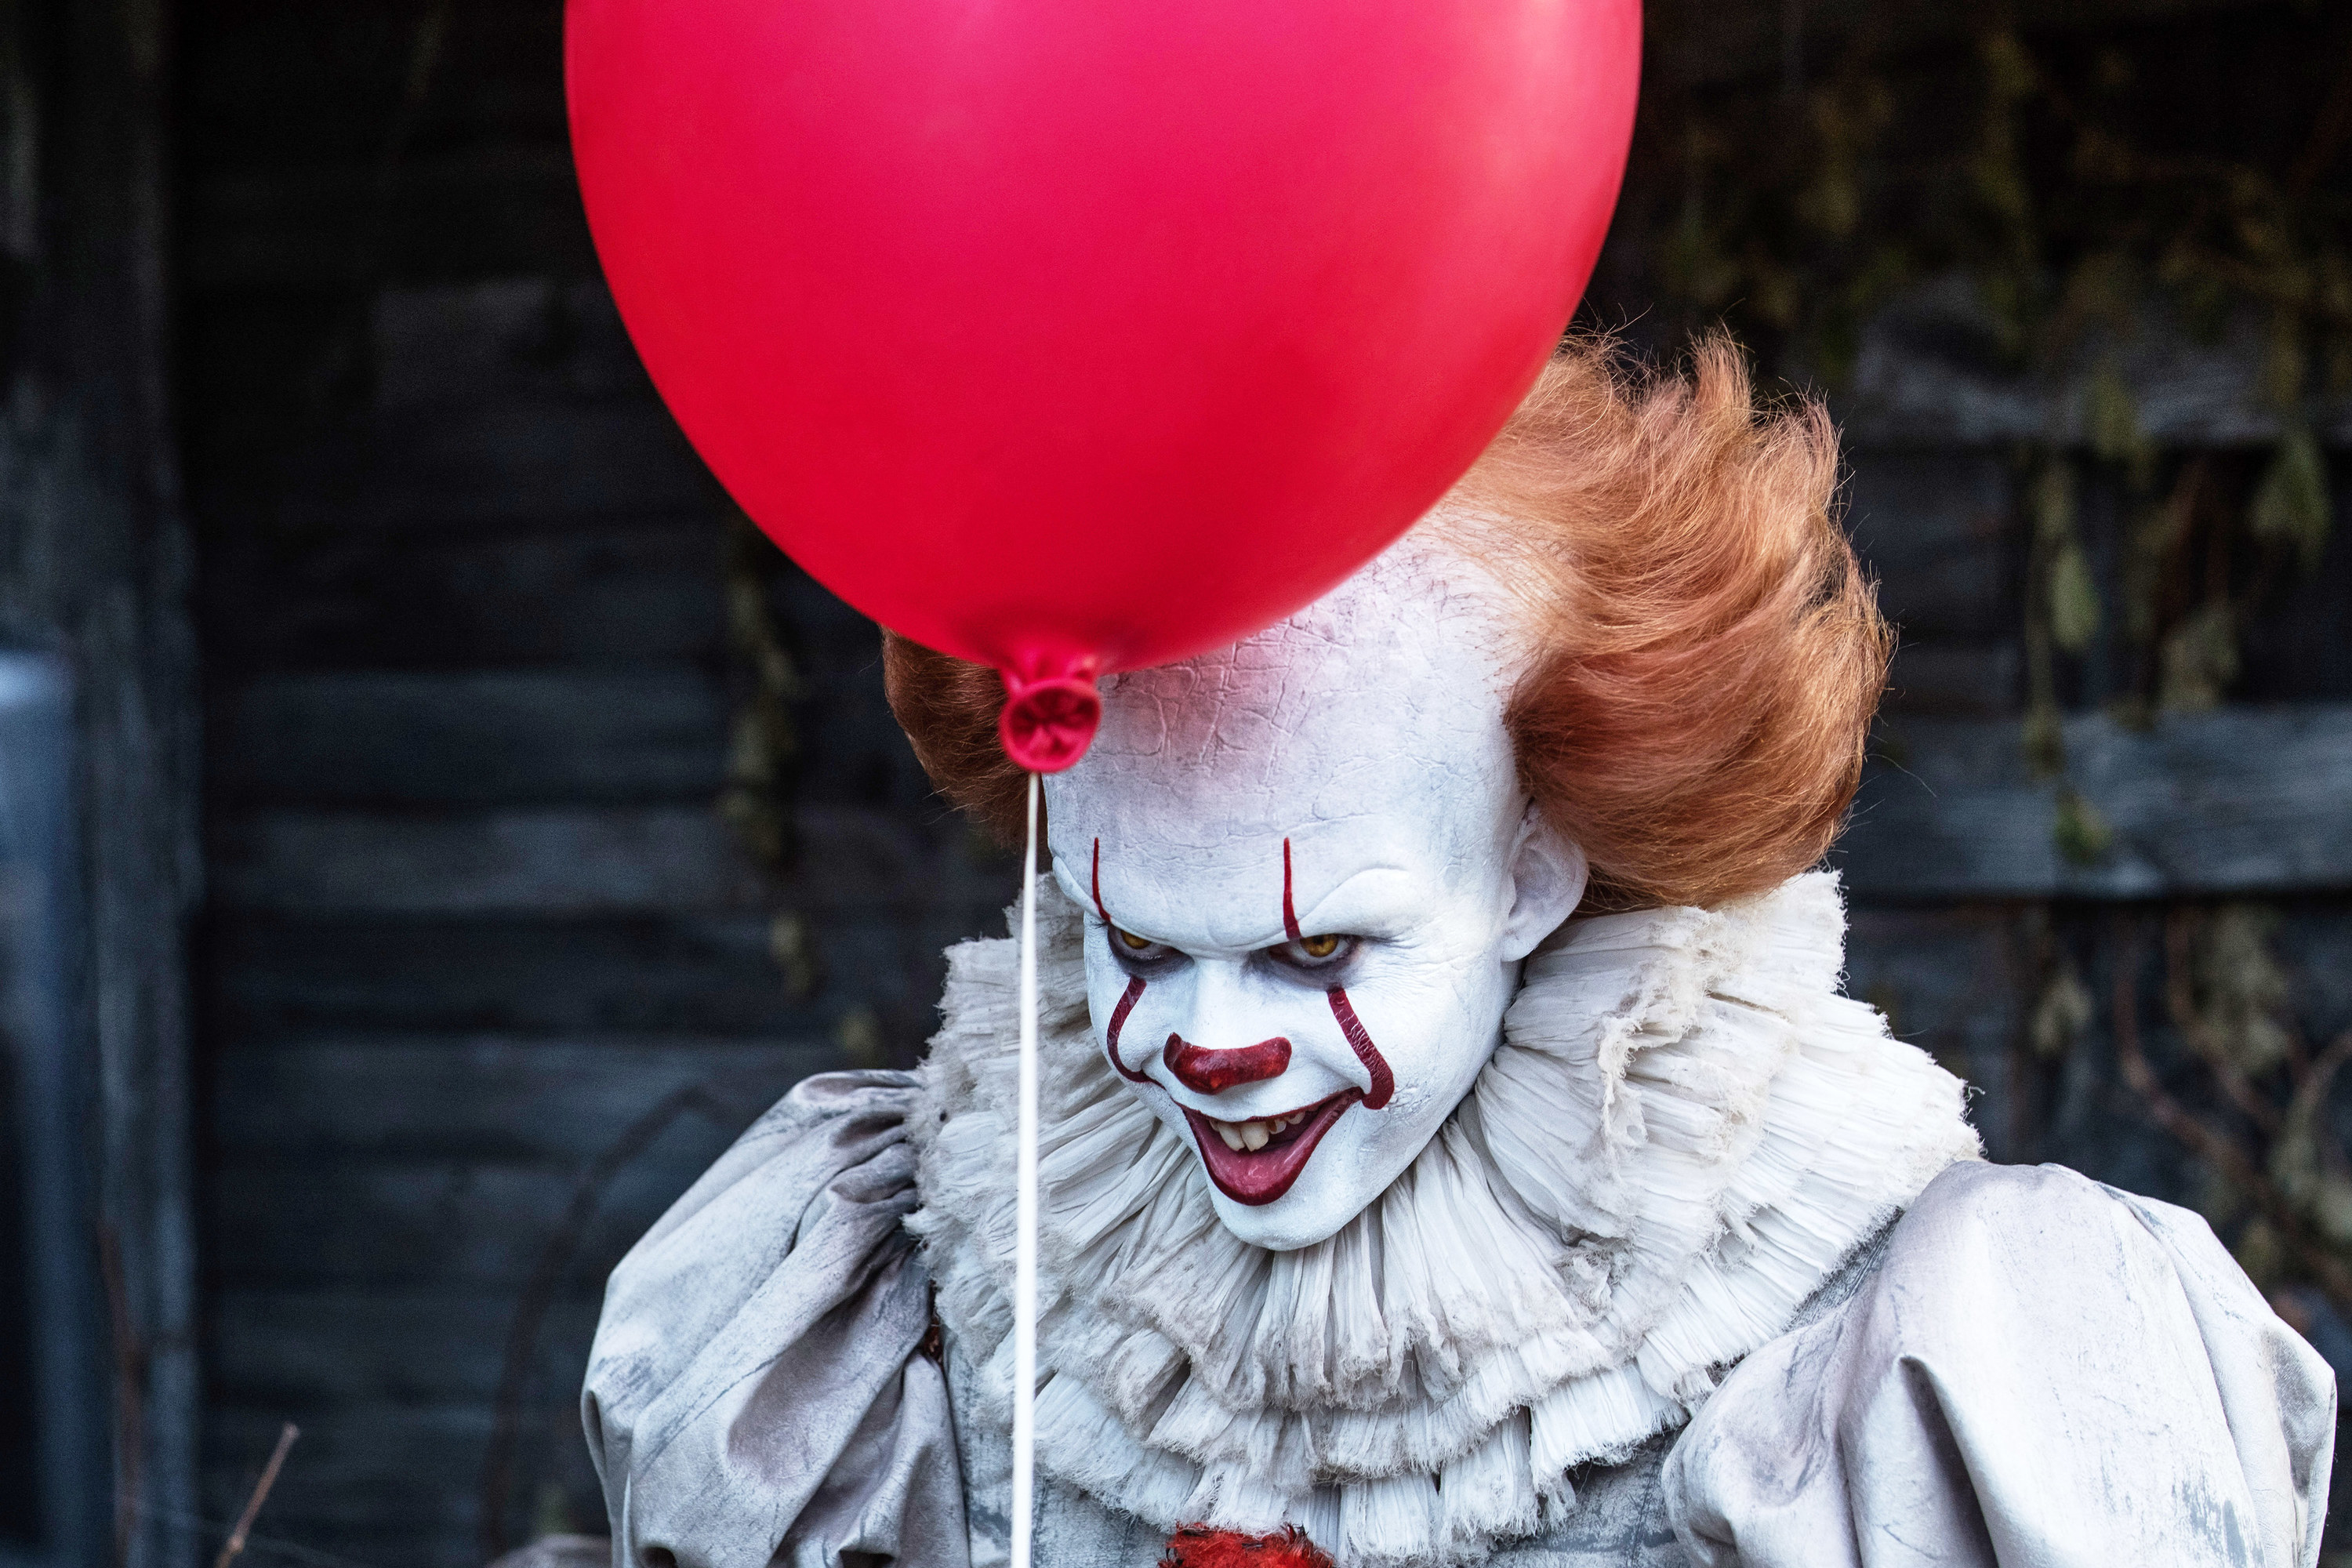 Bill Skarsgard dressed as a clown holding a red balloon